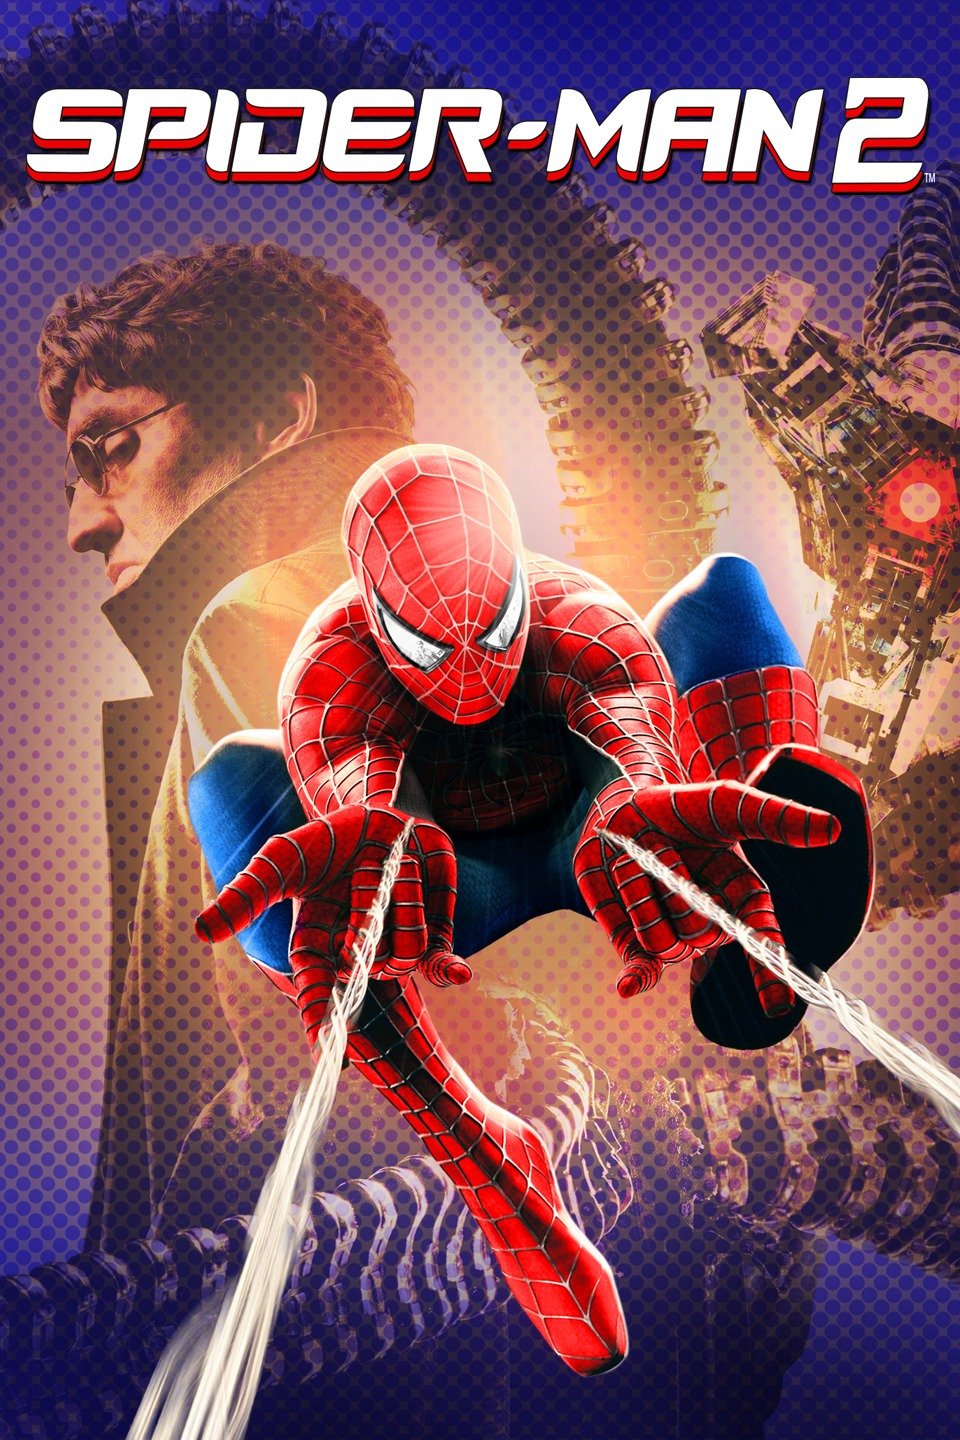 [MINI Super-HQ] Spider-Man 2 (2004) ไอ้แมงมุม 2 [1080p] [พากย์ไทย 5.1 + อังกฤษ DTS] [BluRay.DTS.x264] [บรรยายไทย + อังกฤษ] [เสียงไทย + ซับไทย] [ONE2UP]